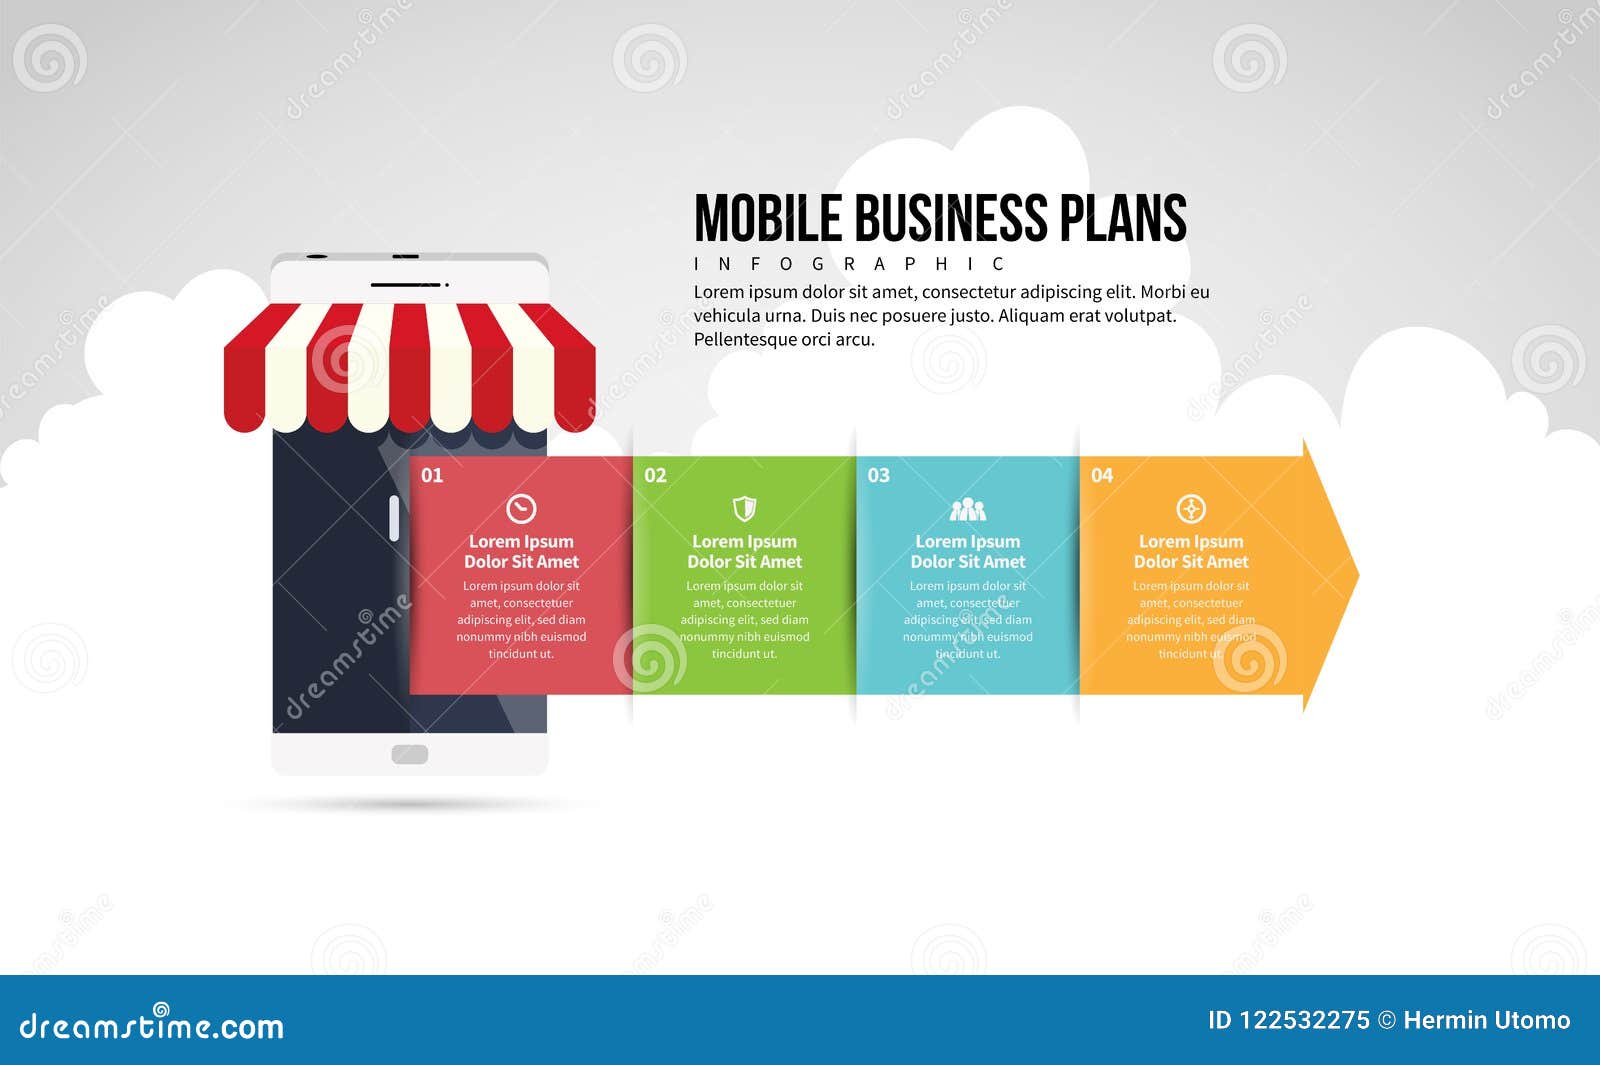 mobile business plans